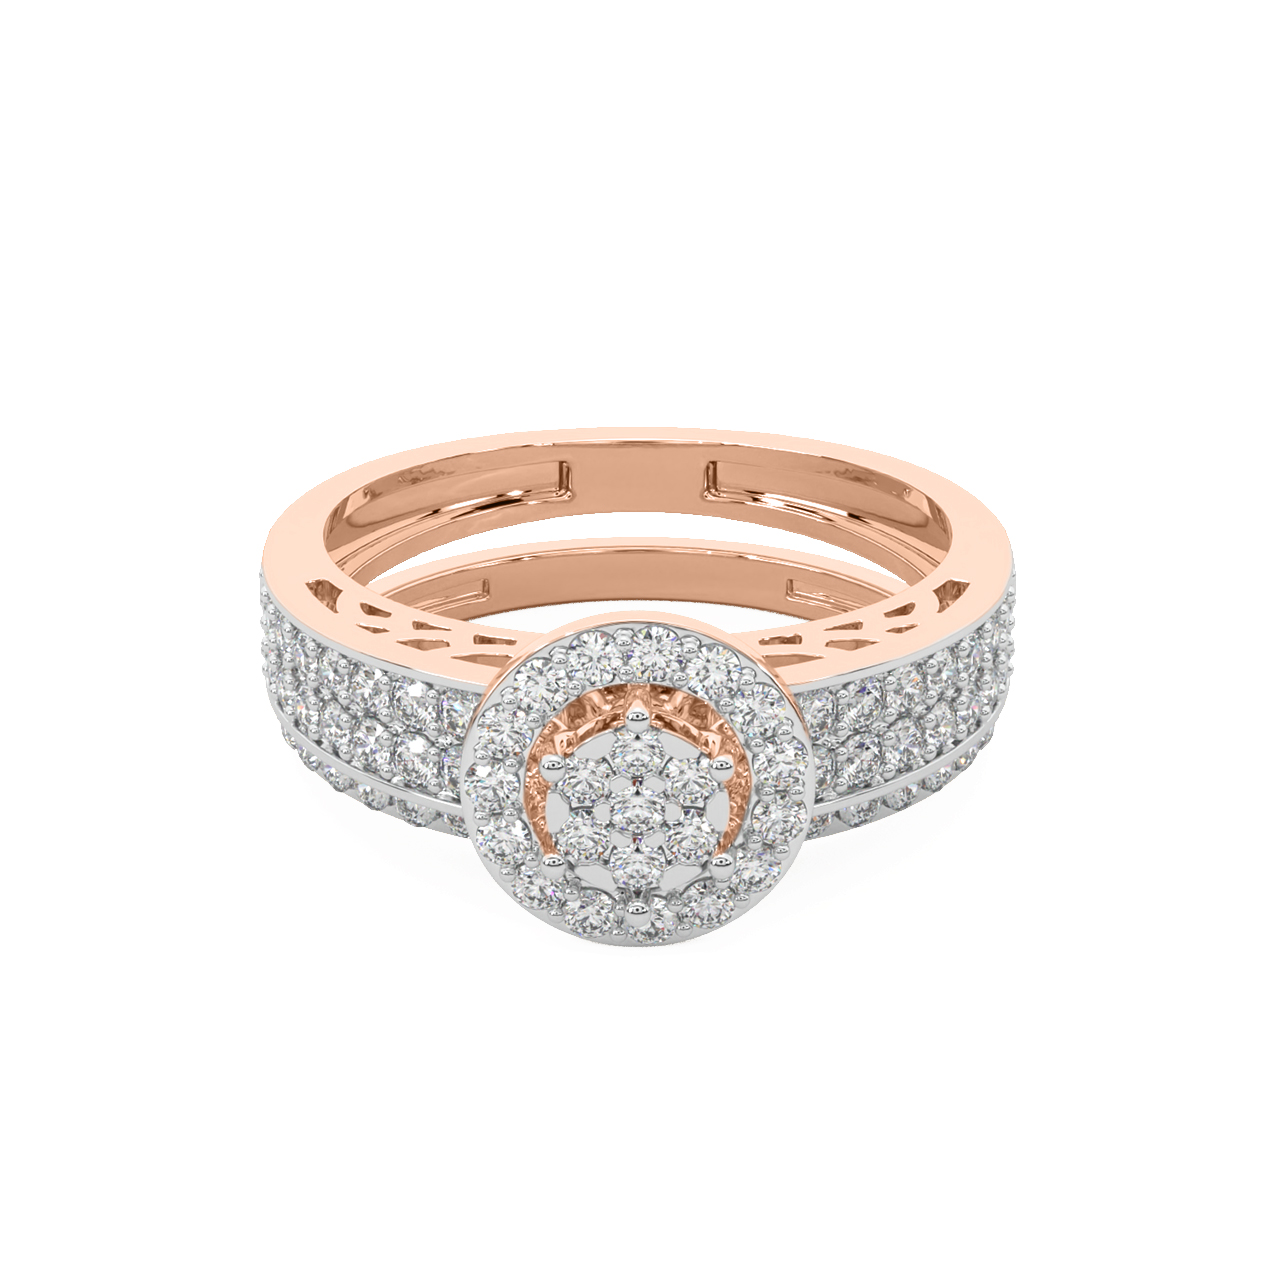 Daniel Round Diamond Engagement Ring